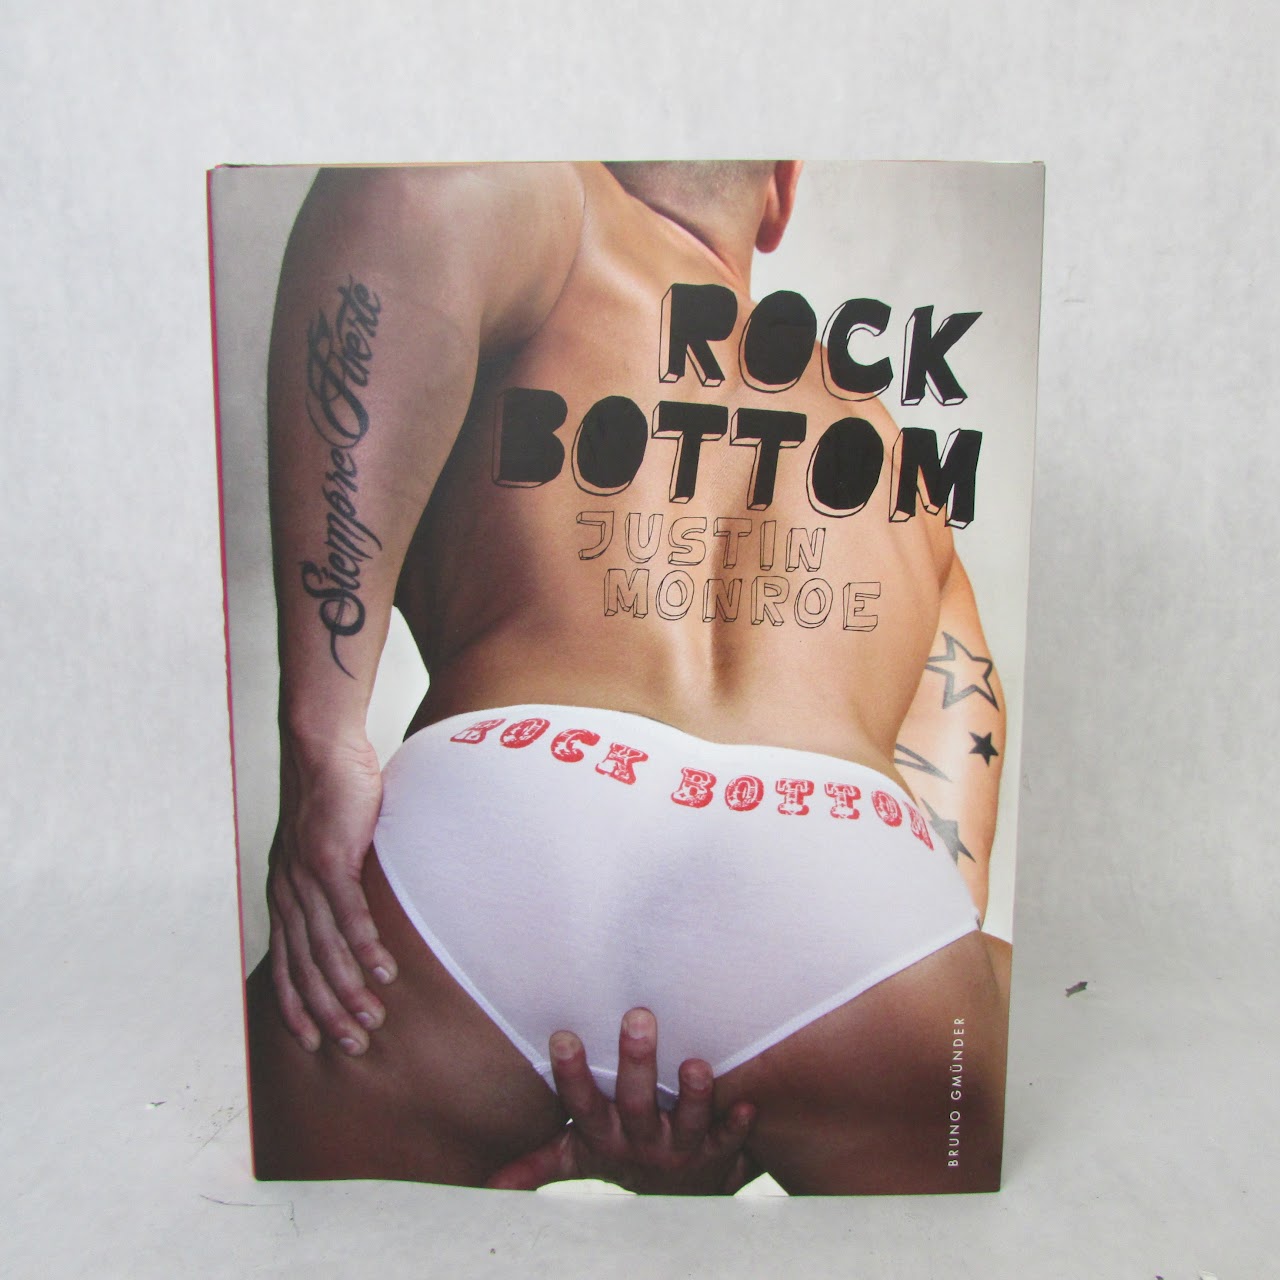 Justin Monroe, "Rock Bottom" Rare Book Explicit Content